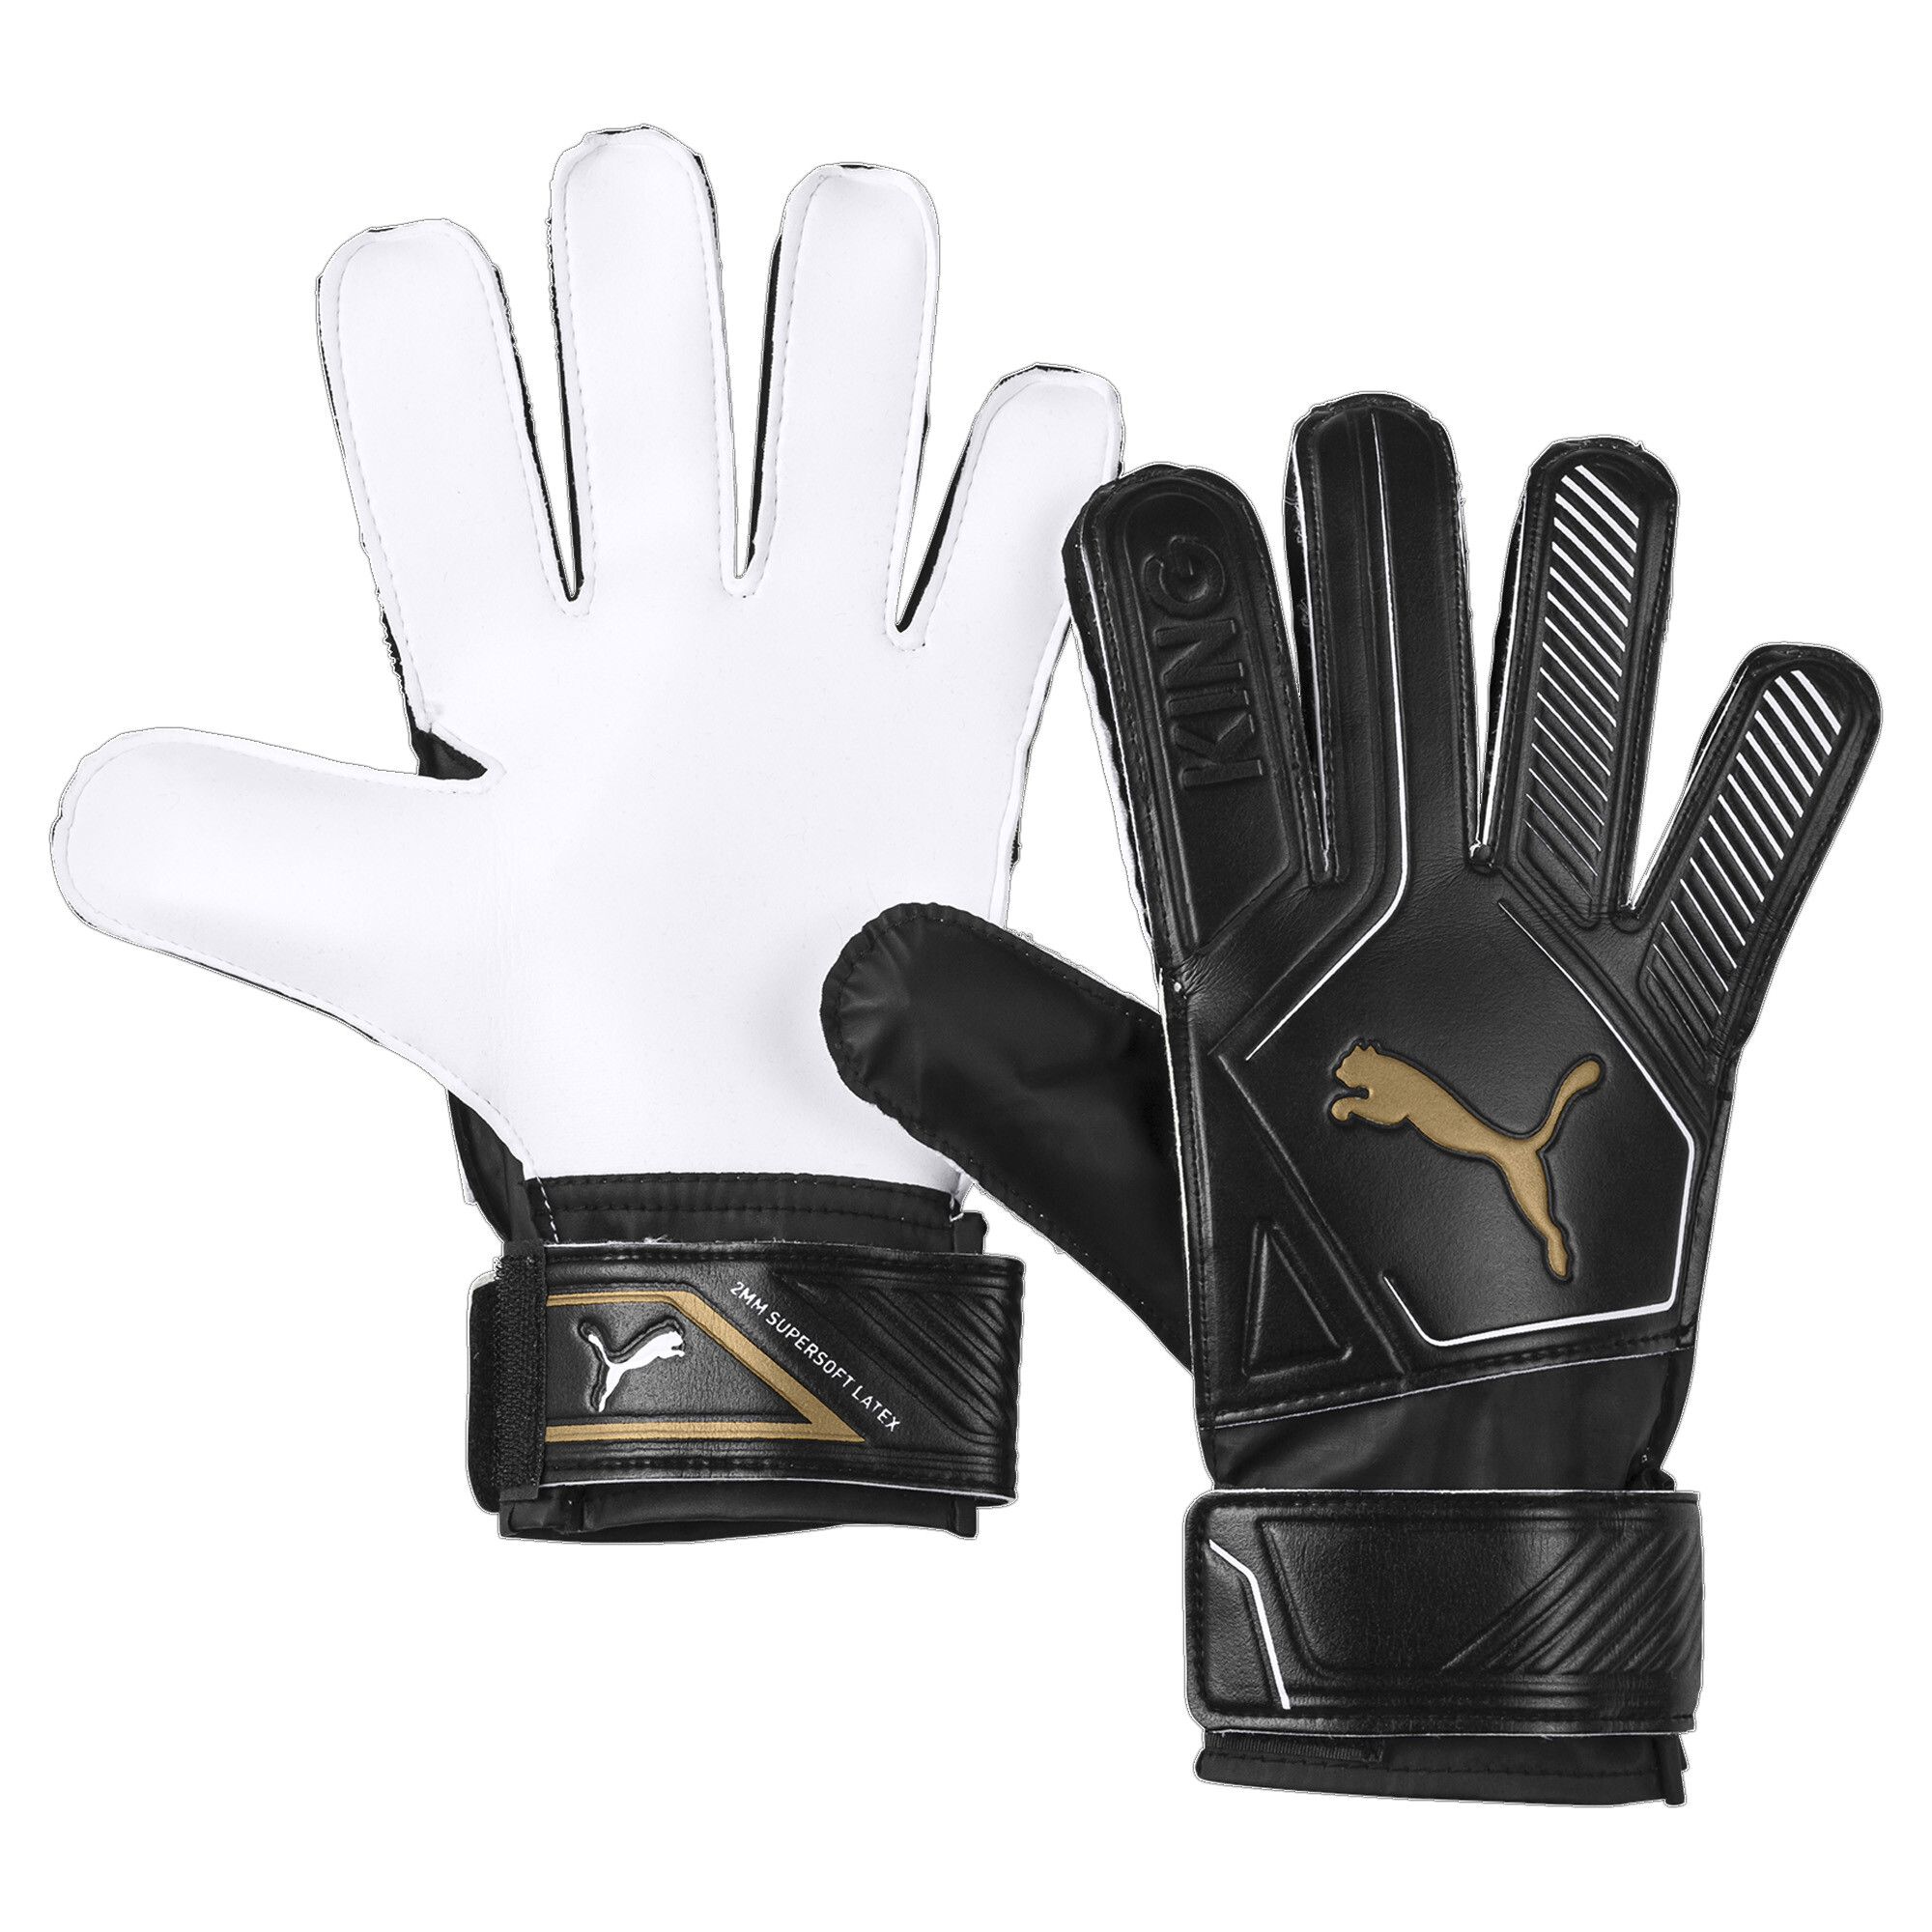 Puma King 4 Goalkeeper Gloves, Black, Size 5, Accessories